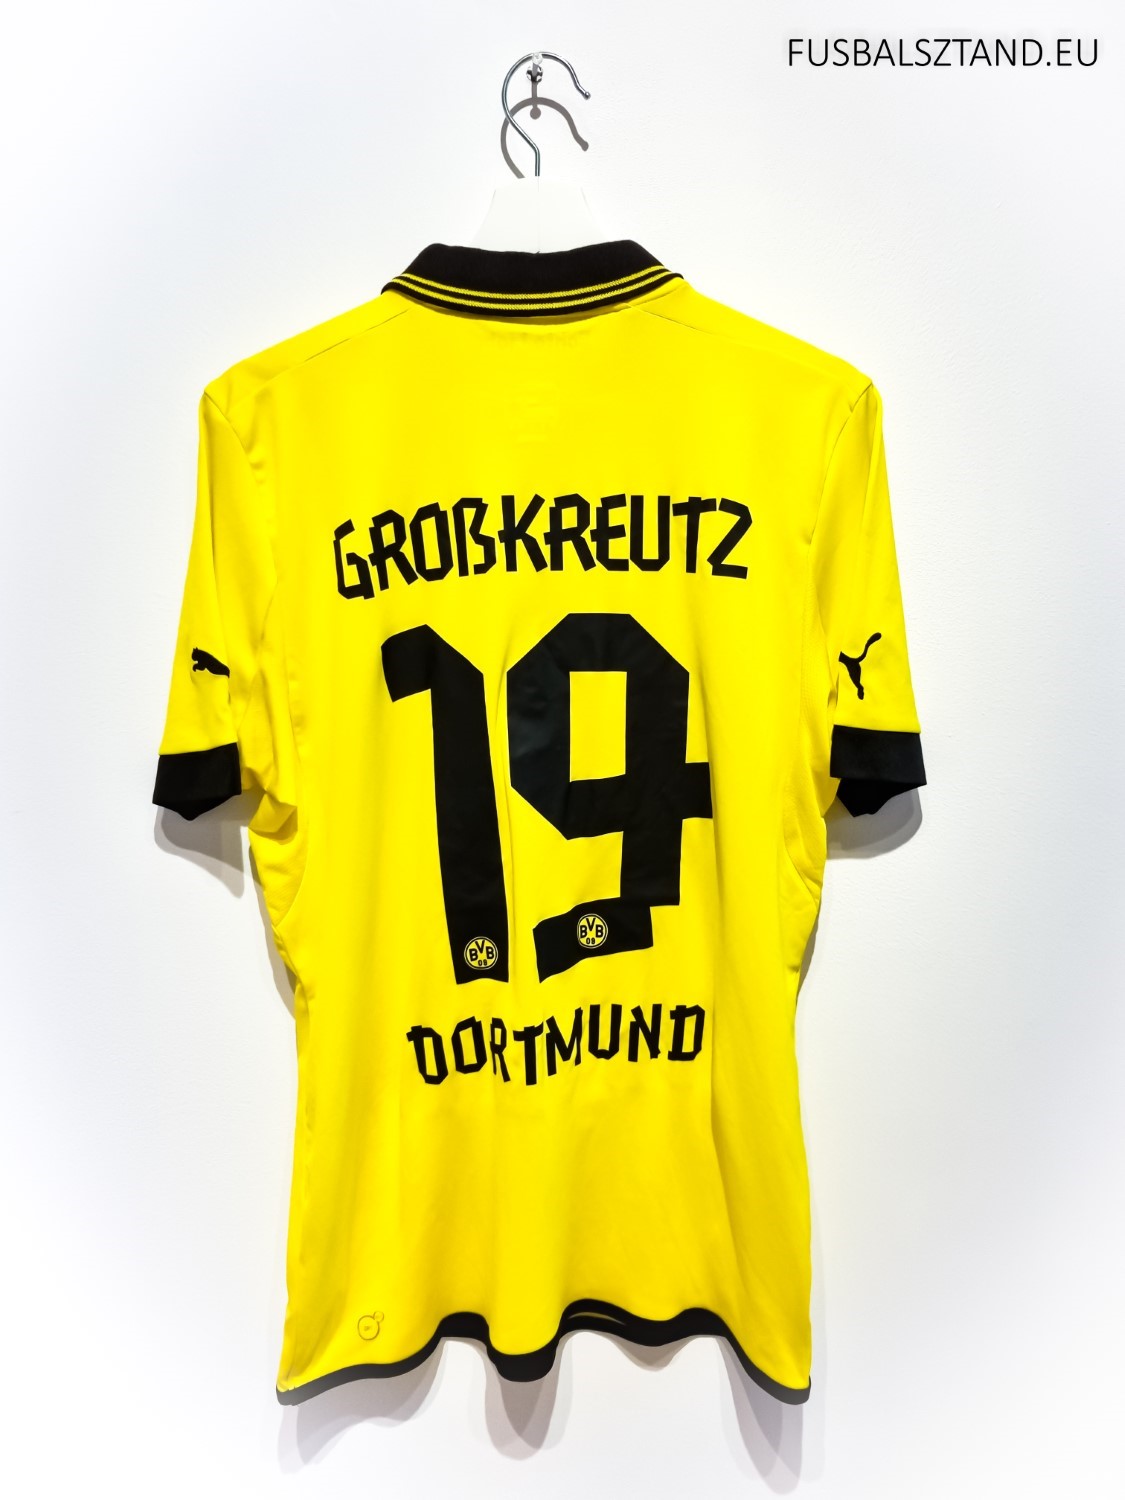 BVB Borussia Dortmund 2012/13 Home M Kevin Großkreutz 741410